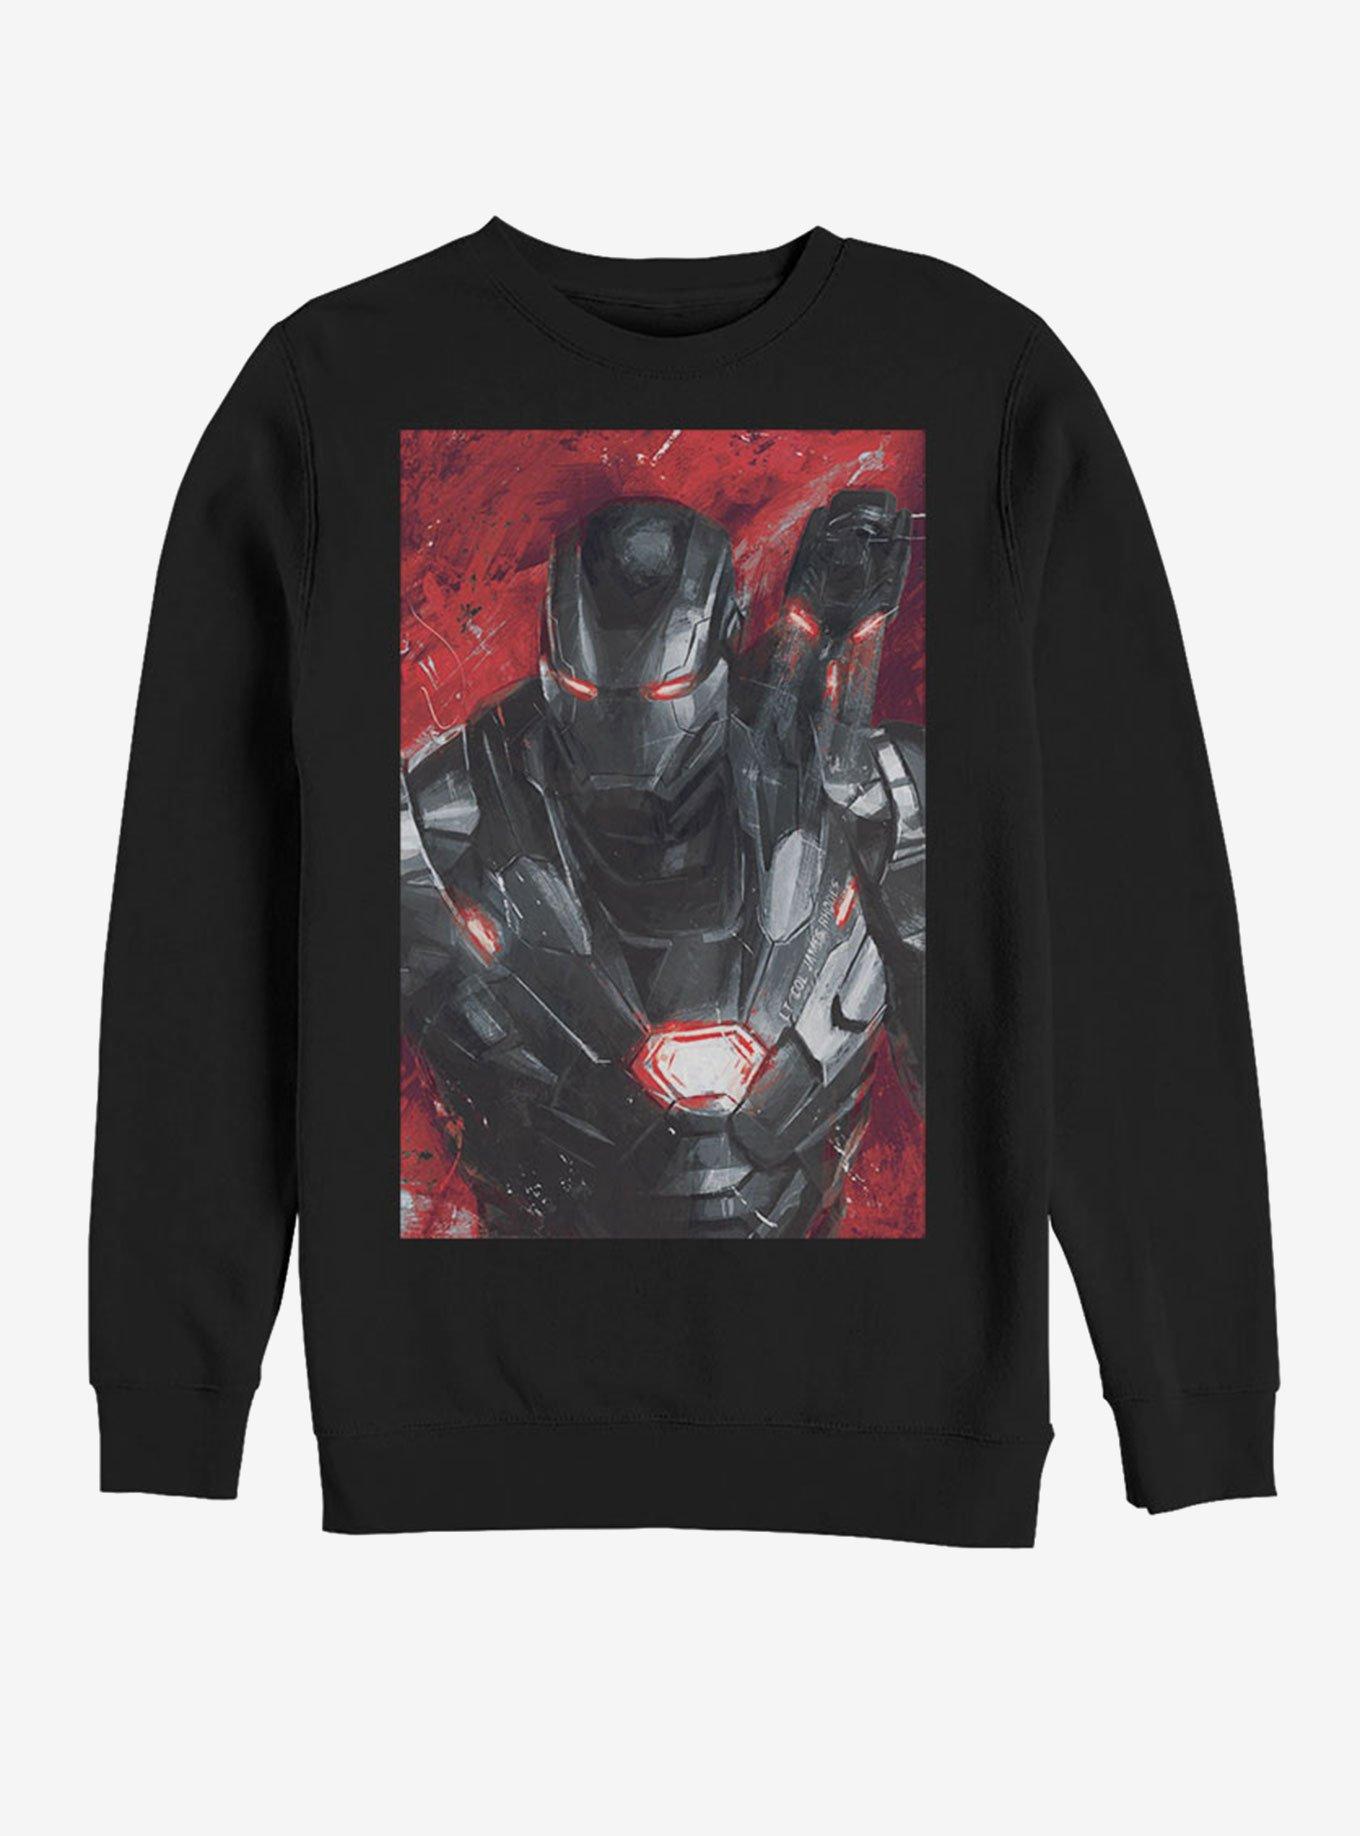 Marvel Avengers: Endgame War Machine Painted Sweatshirt